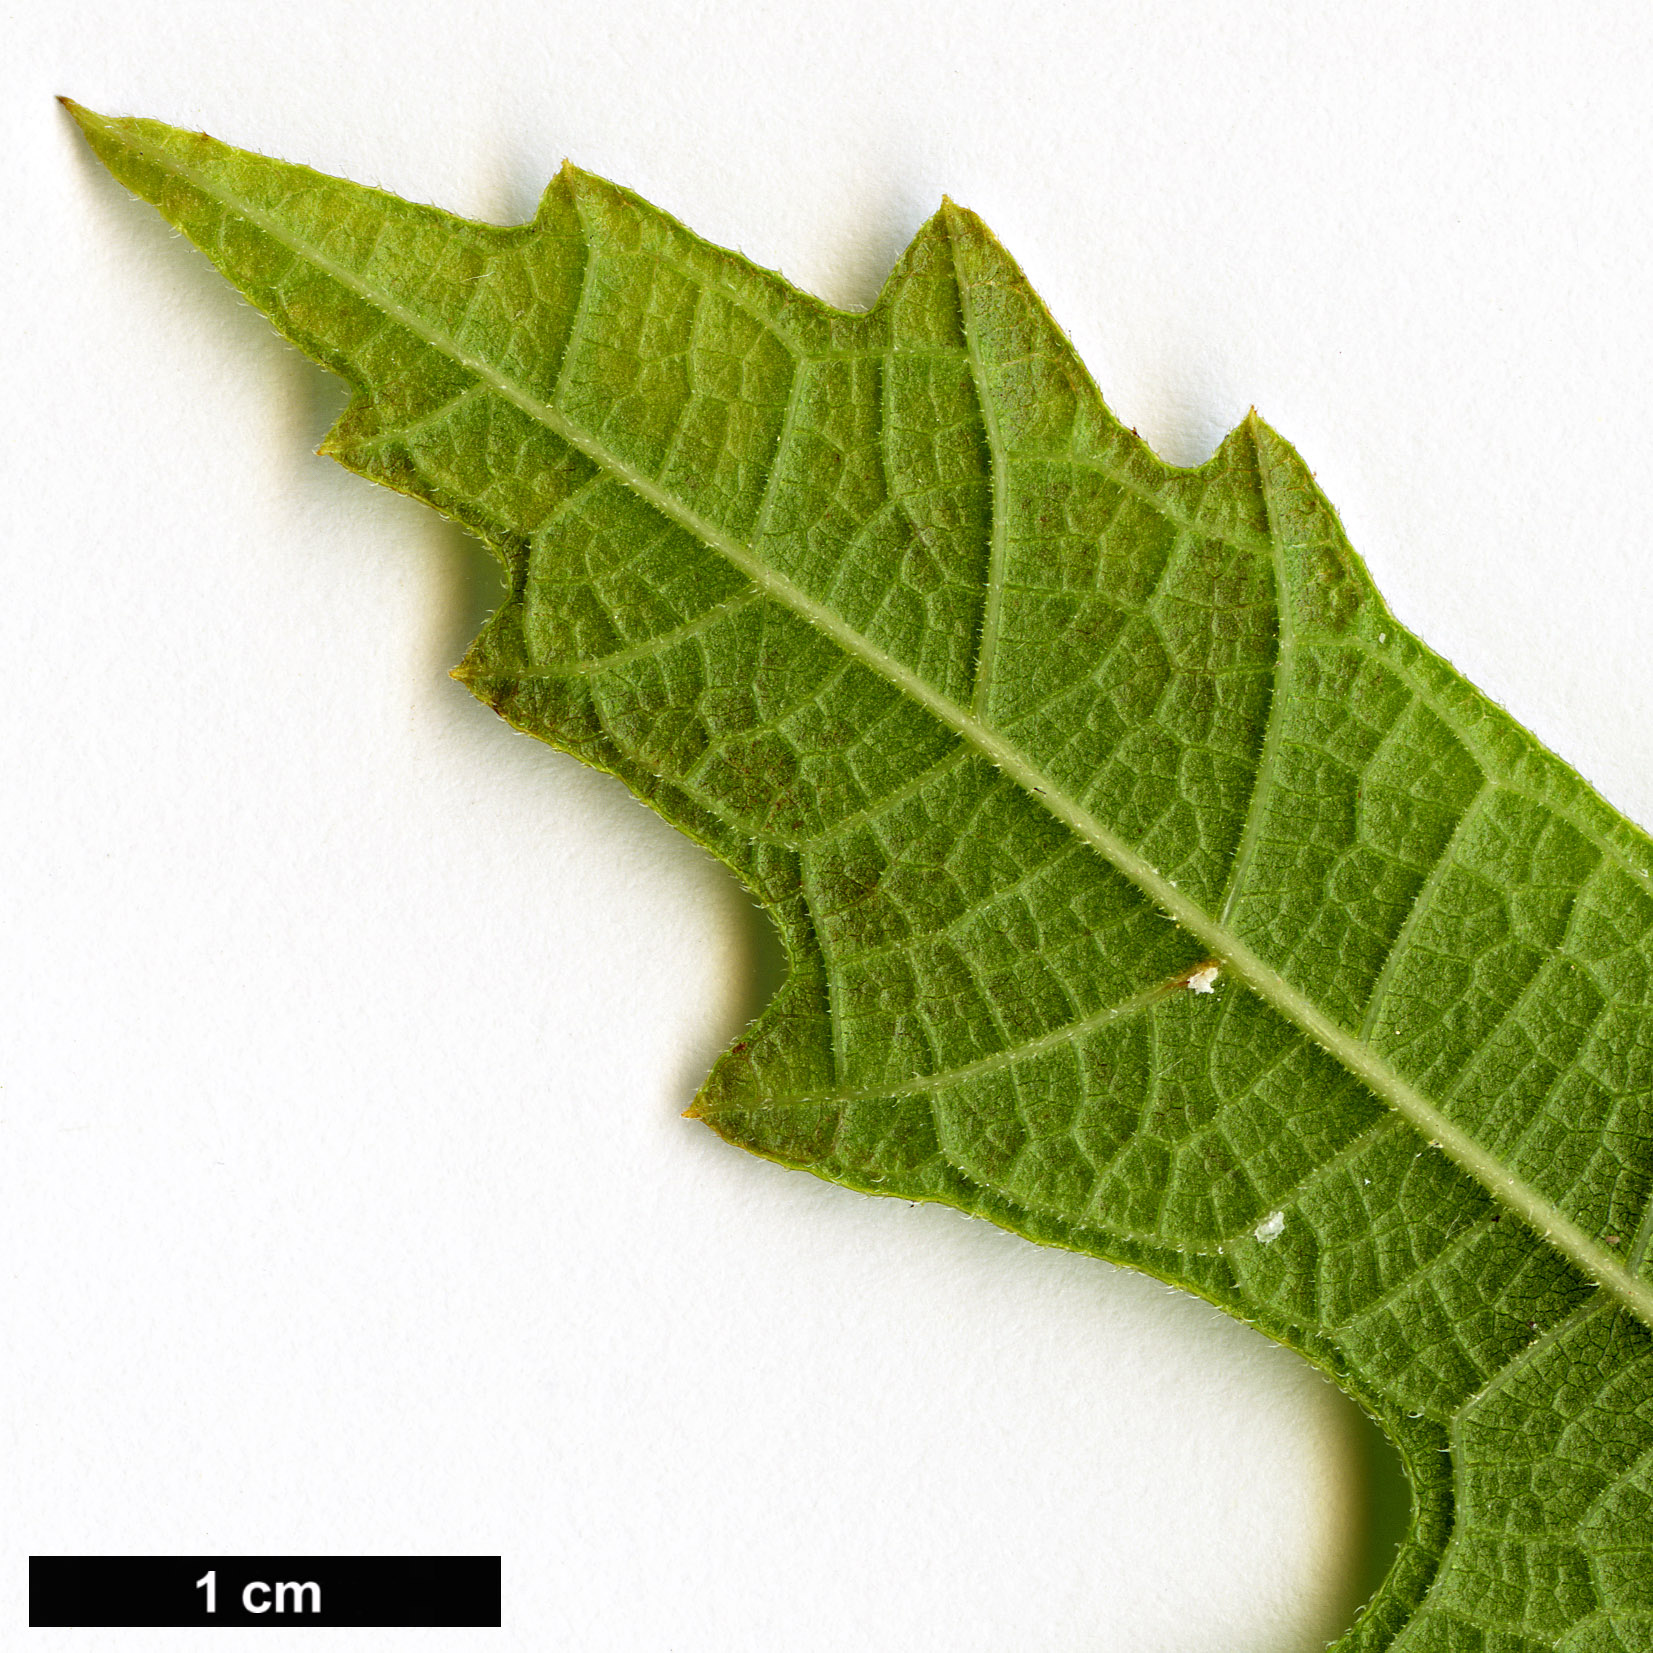 High resolution image: Family: Moraceae - Genus: Ficus - Taxon: johannis - SpeciesSub: subsp. afghanistanica